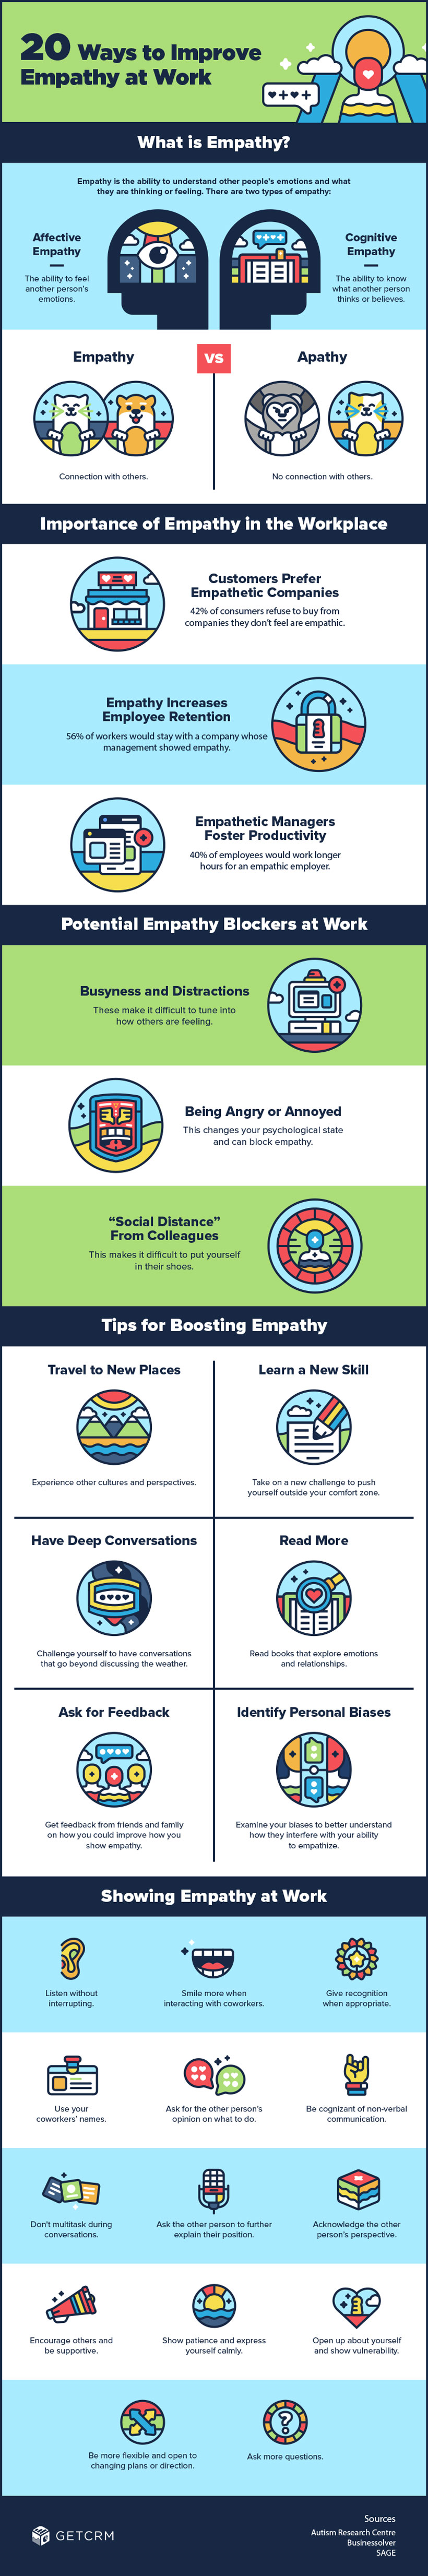 20 Ways to Improve Empathy at Work